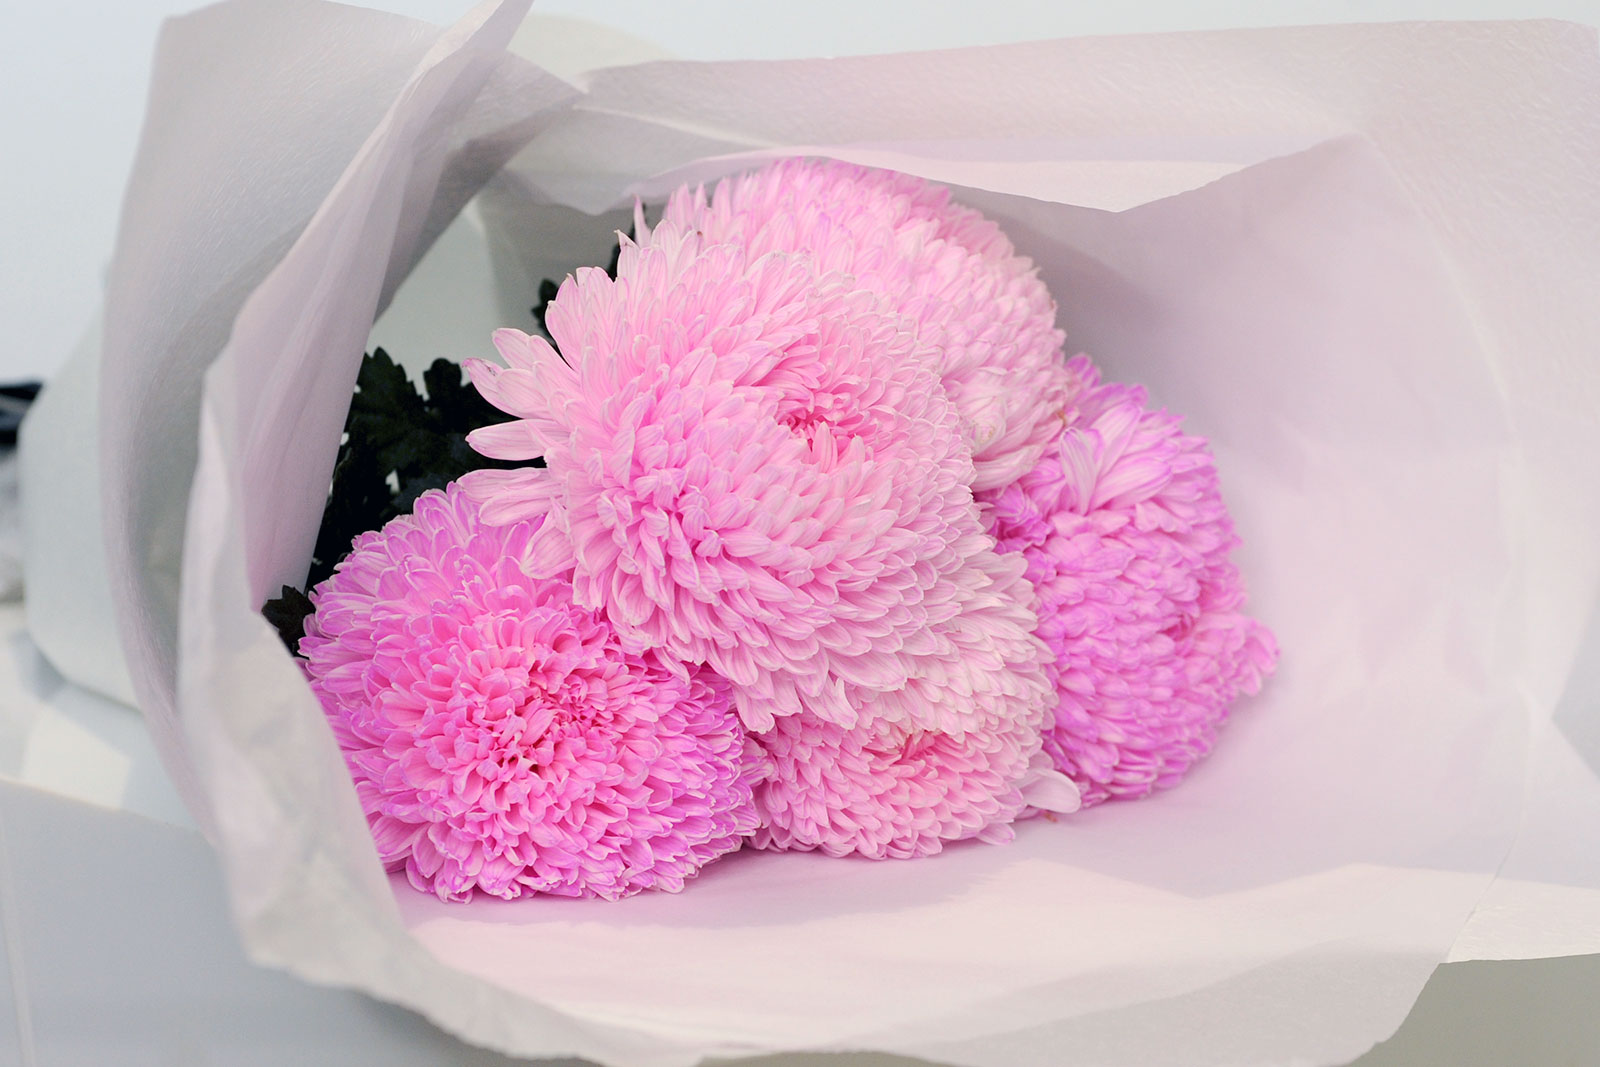 Disbud Chrysanthemum - Pink